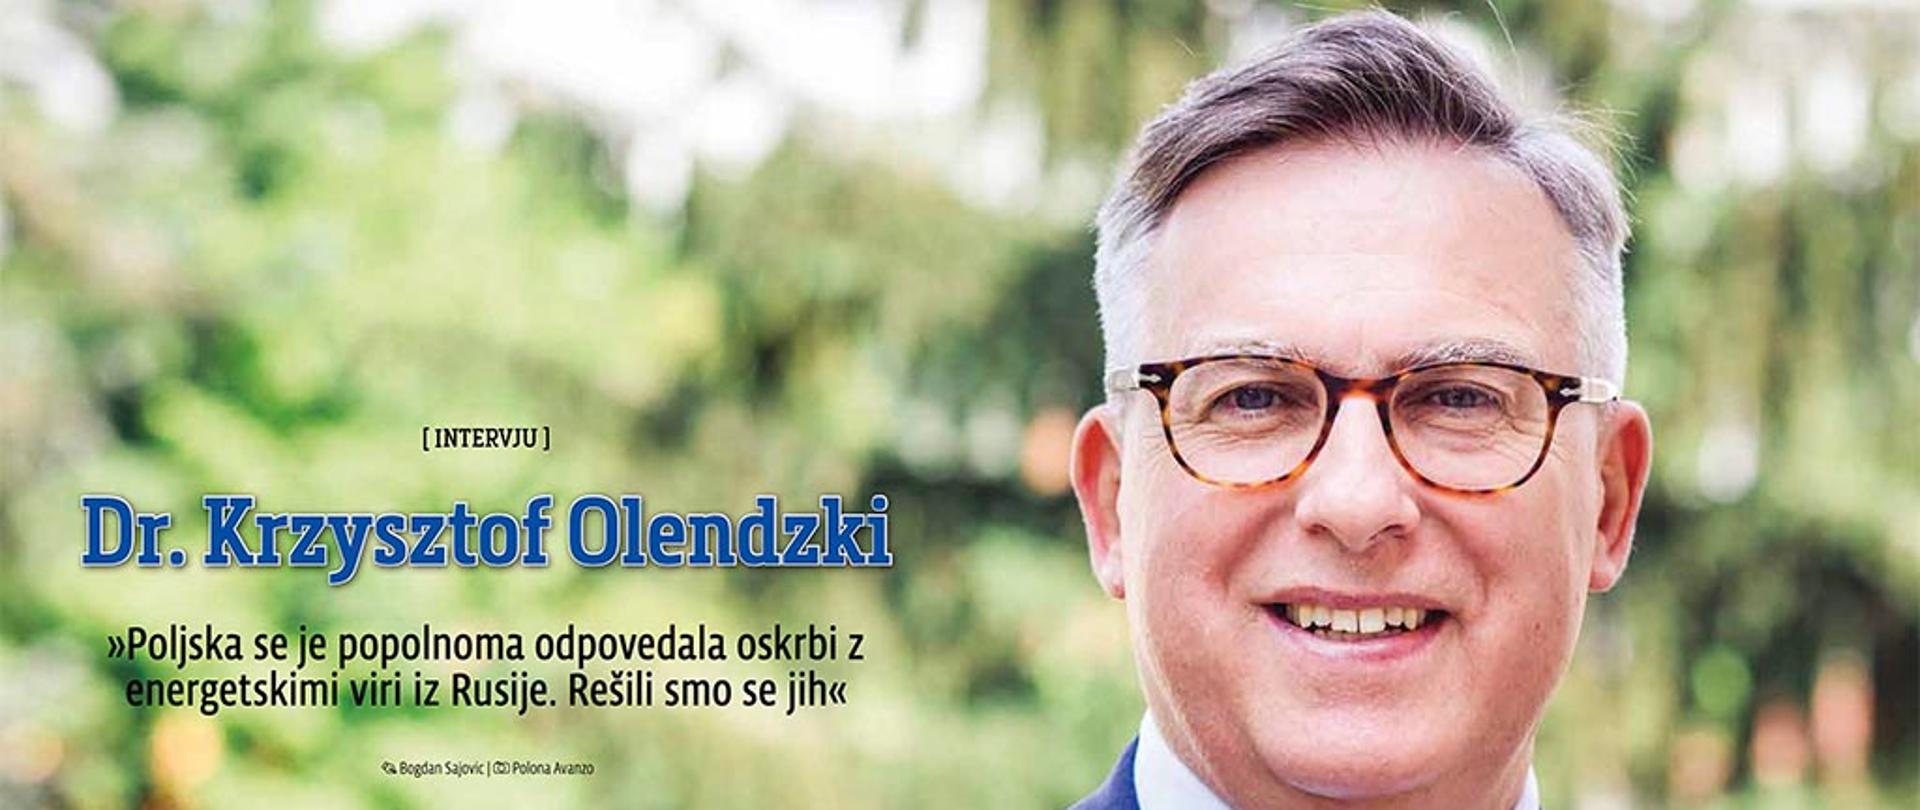 Veleposlanik Krzysztof Olendzki